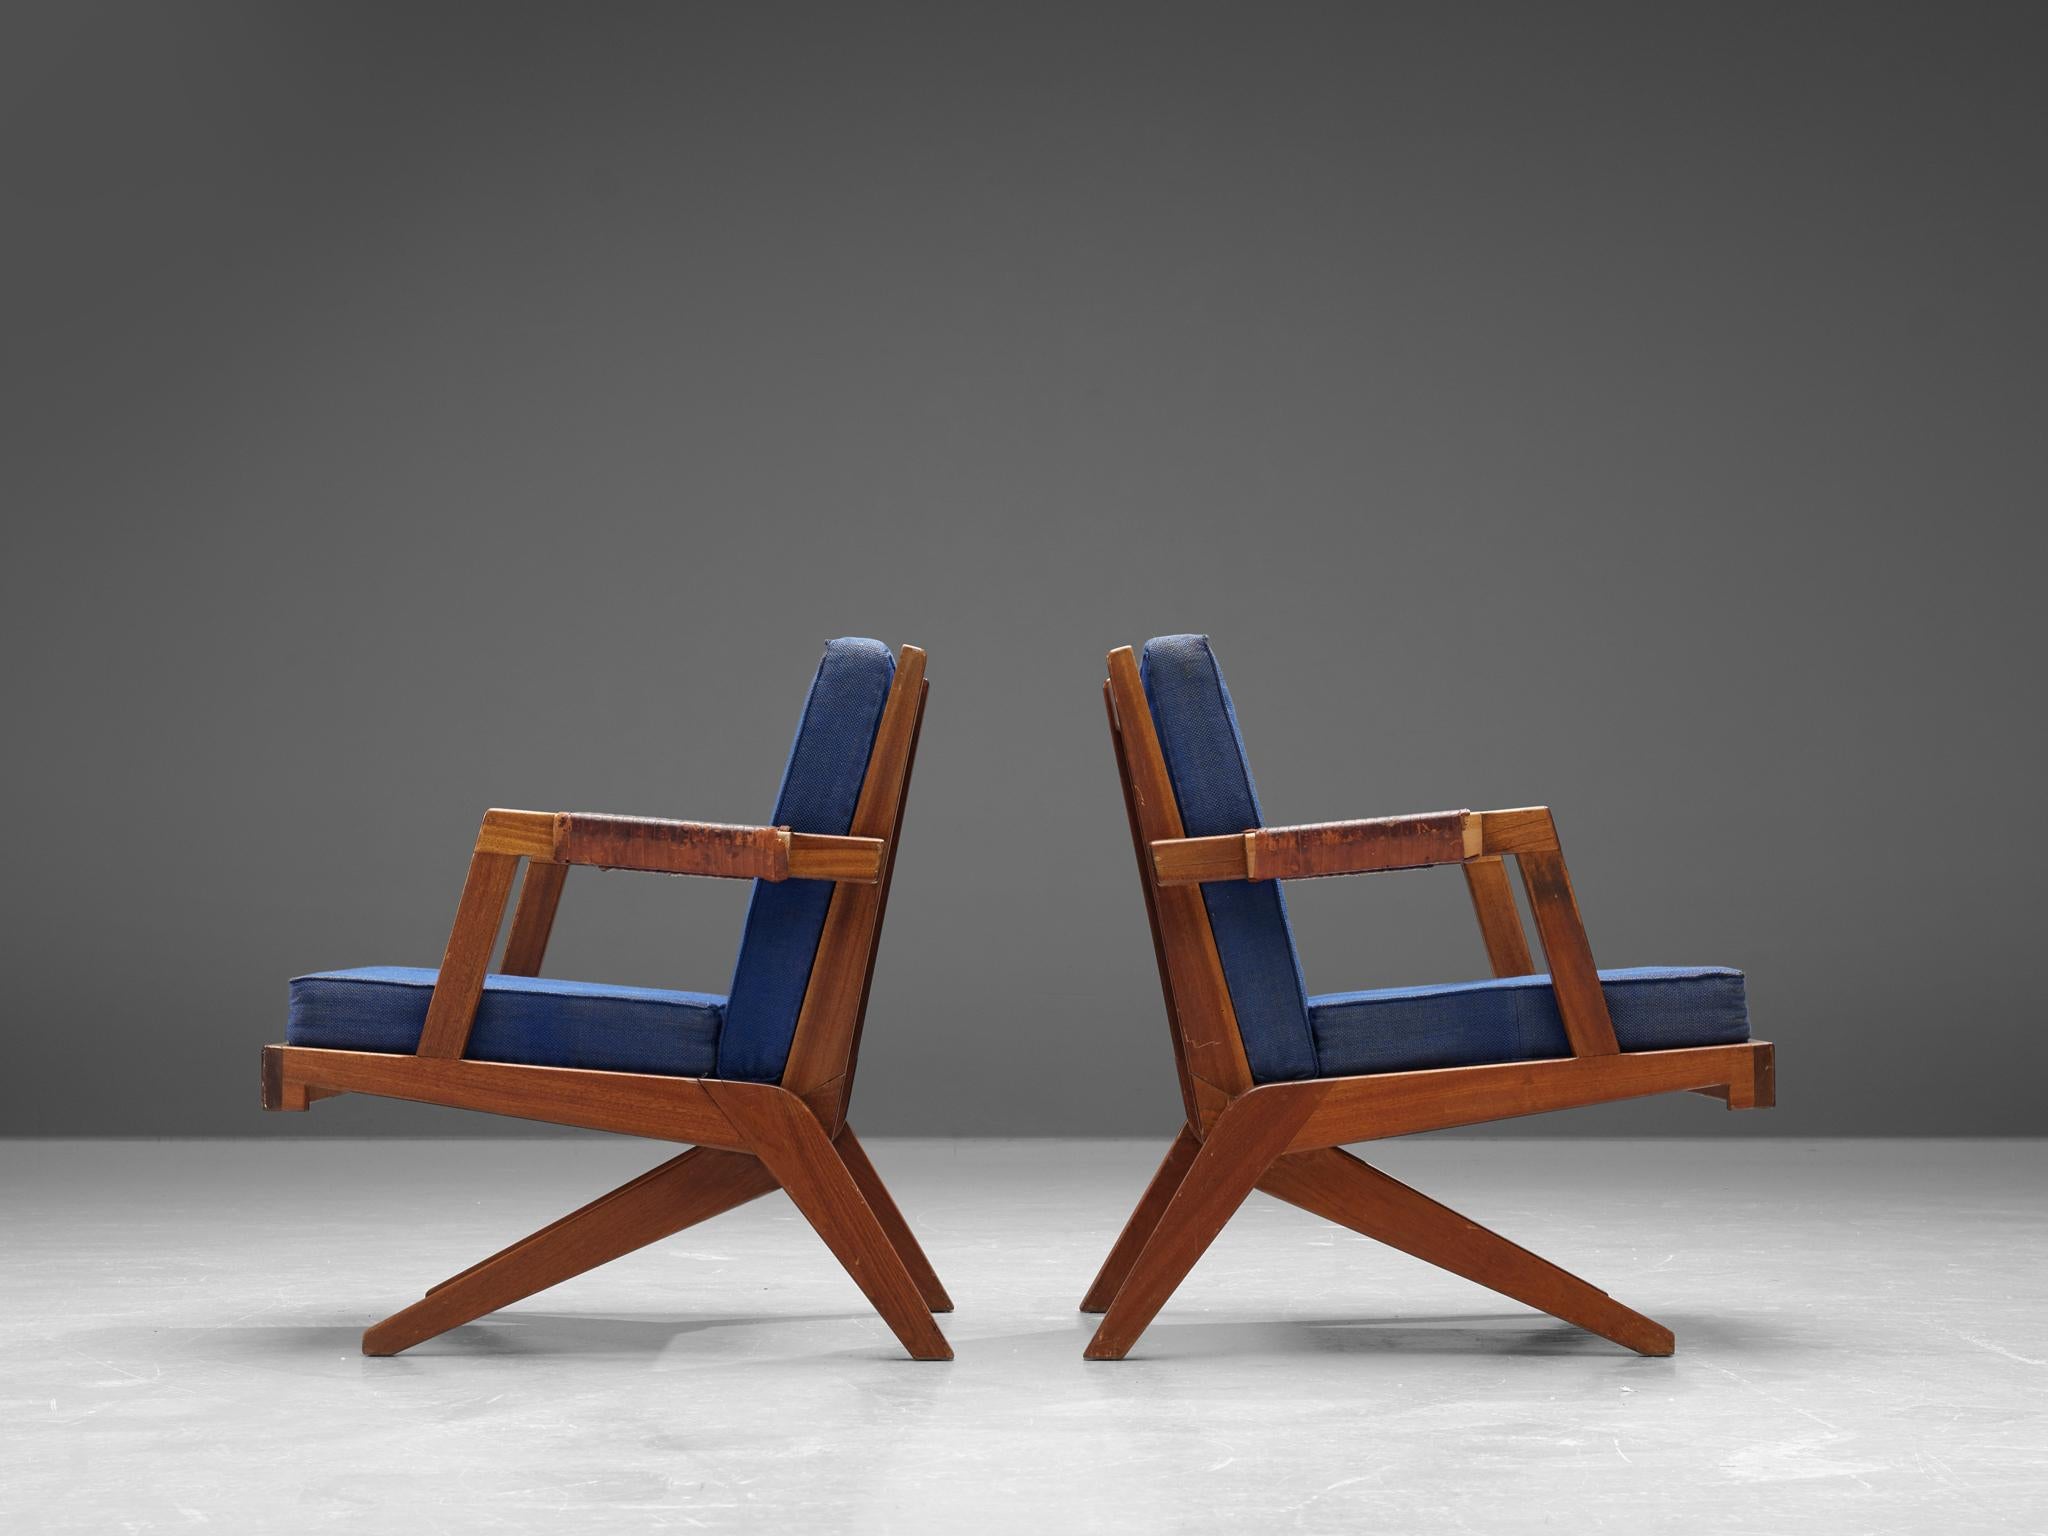 Mahogany Olavi Hanninen 'Boomerang' Chairs with Blue Upholstery